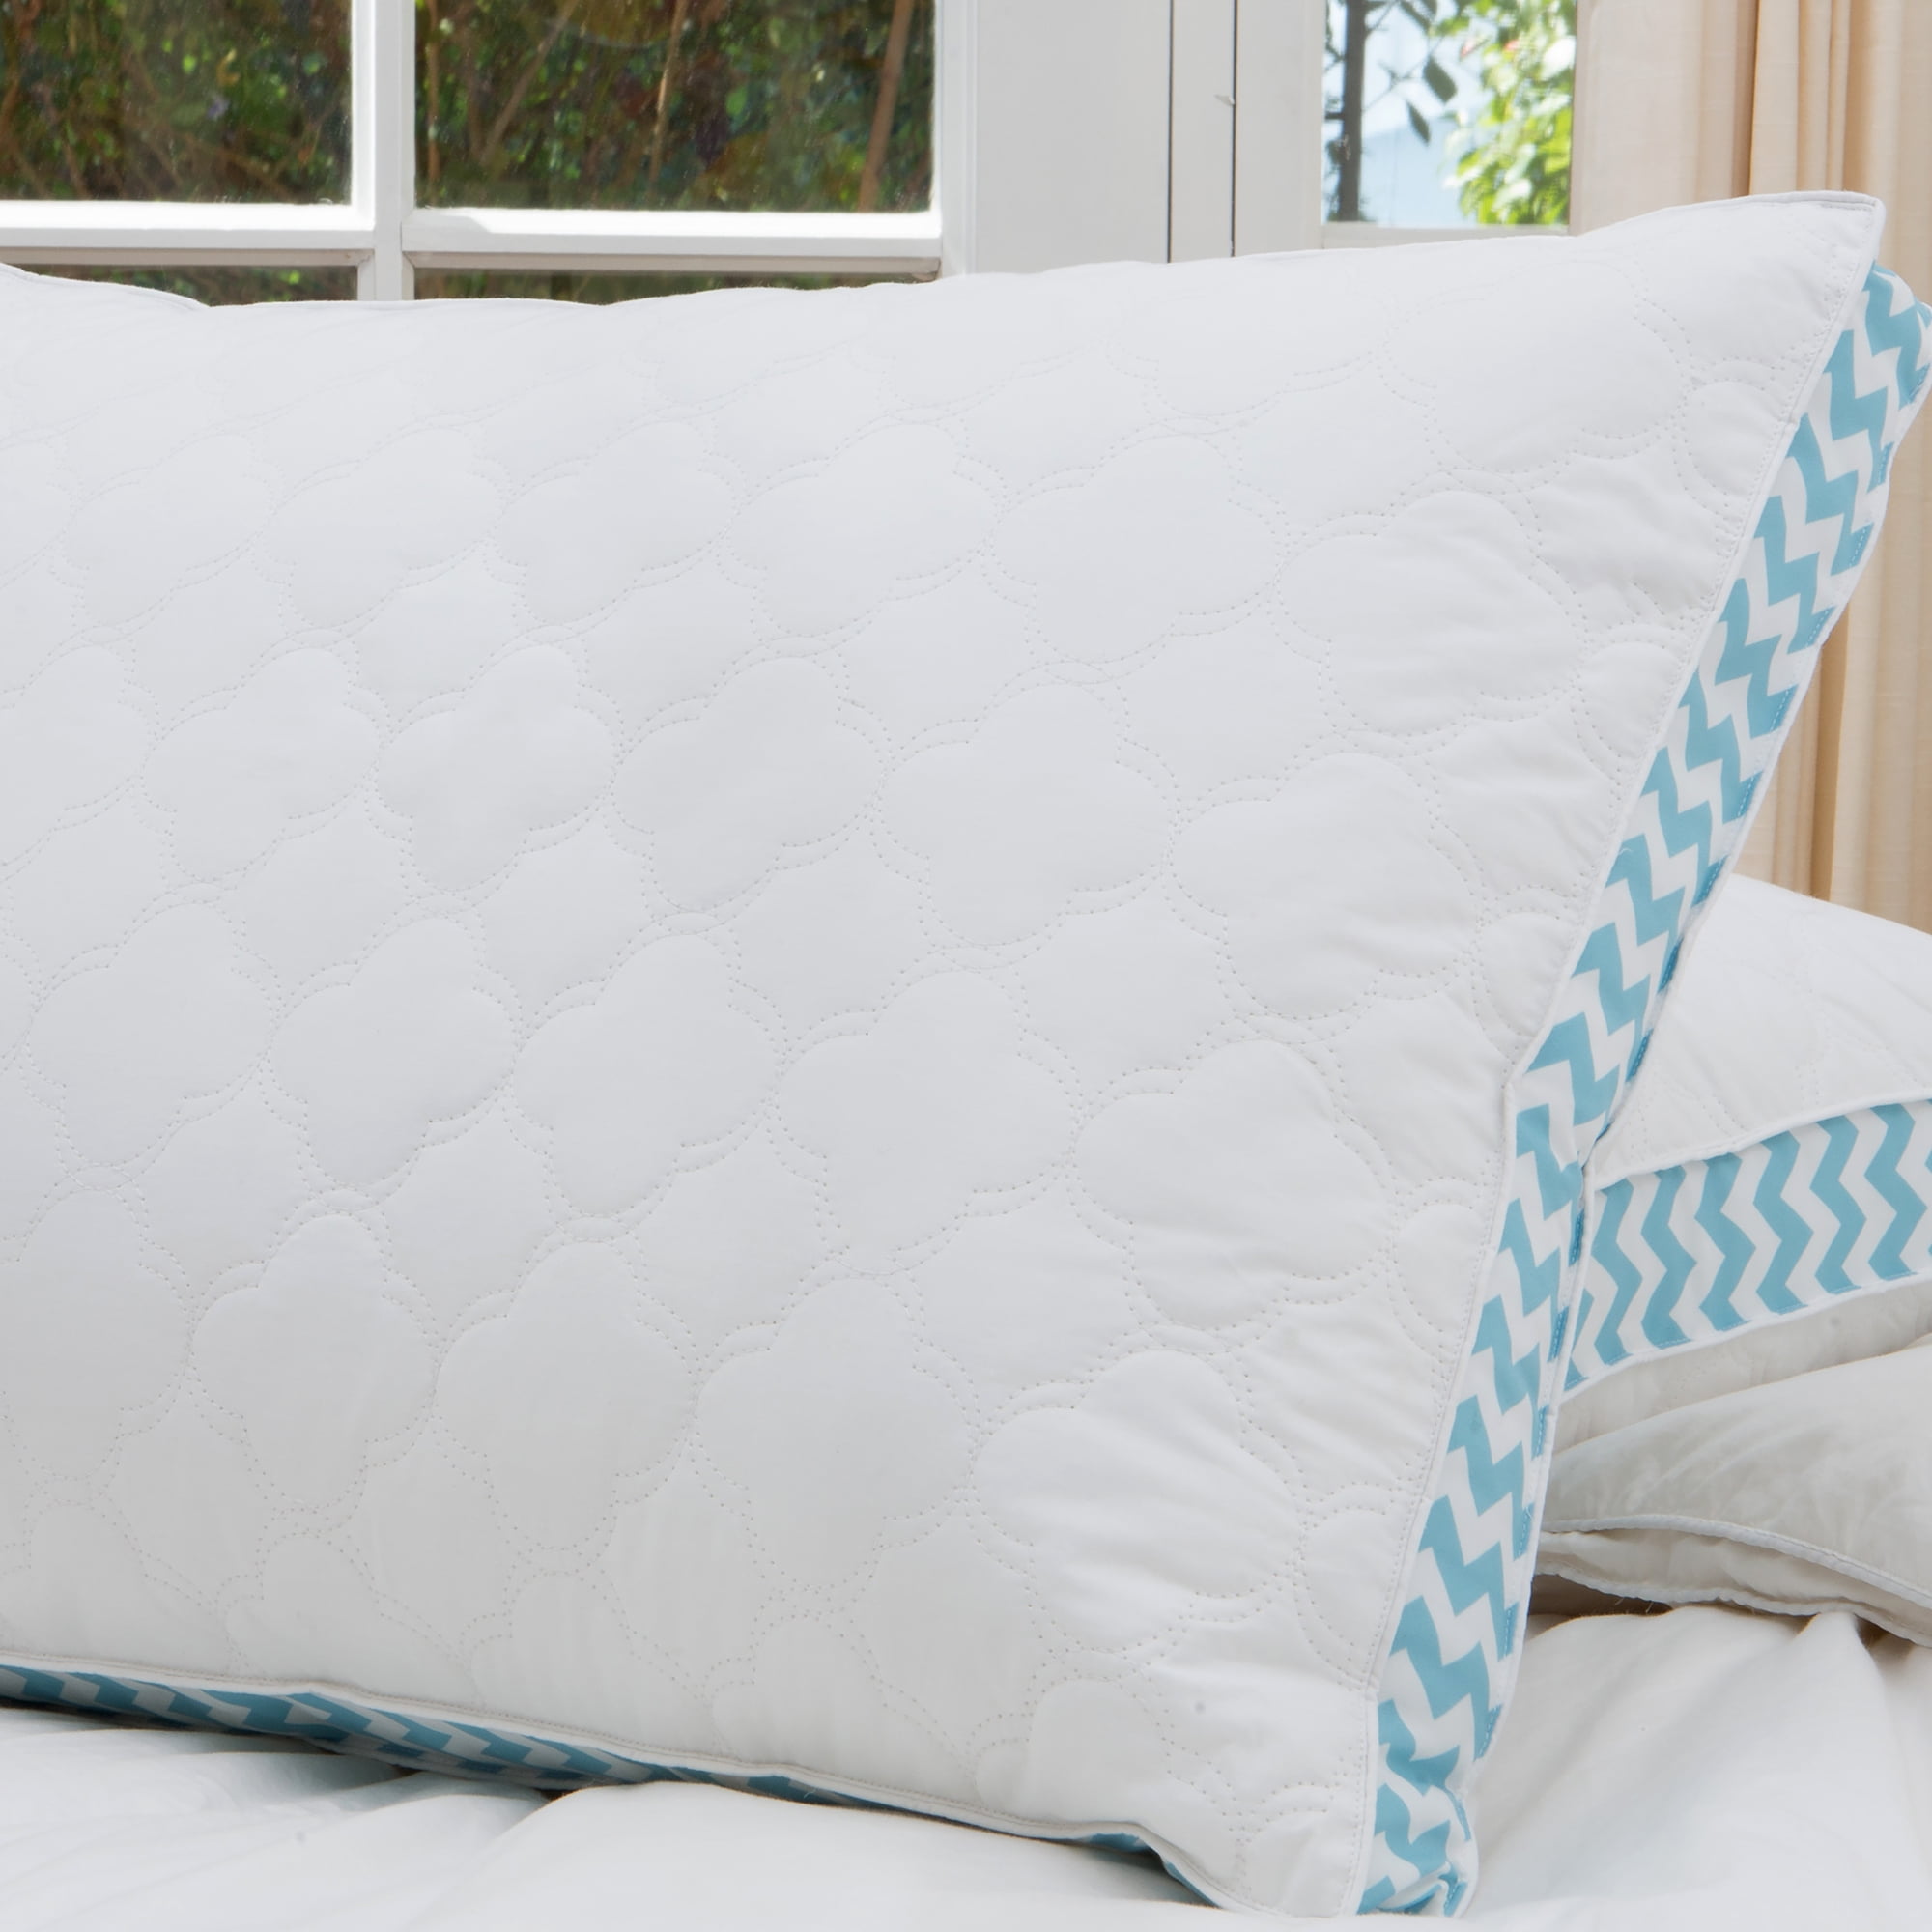 Details about   Soft-Tex Pillows 20"x26"  Set of 2 